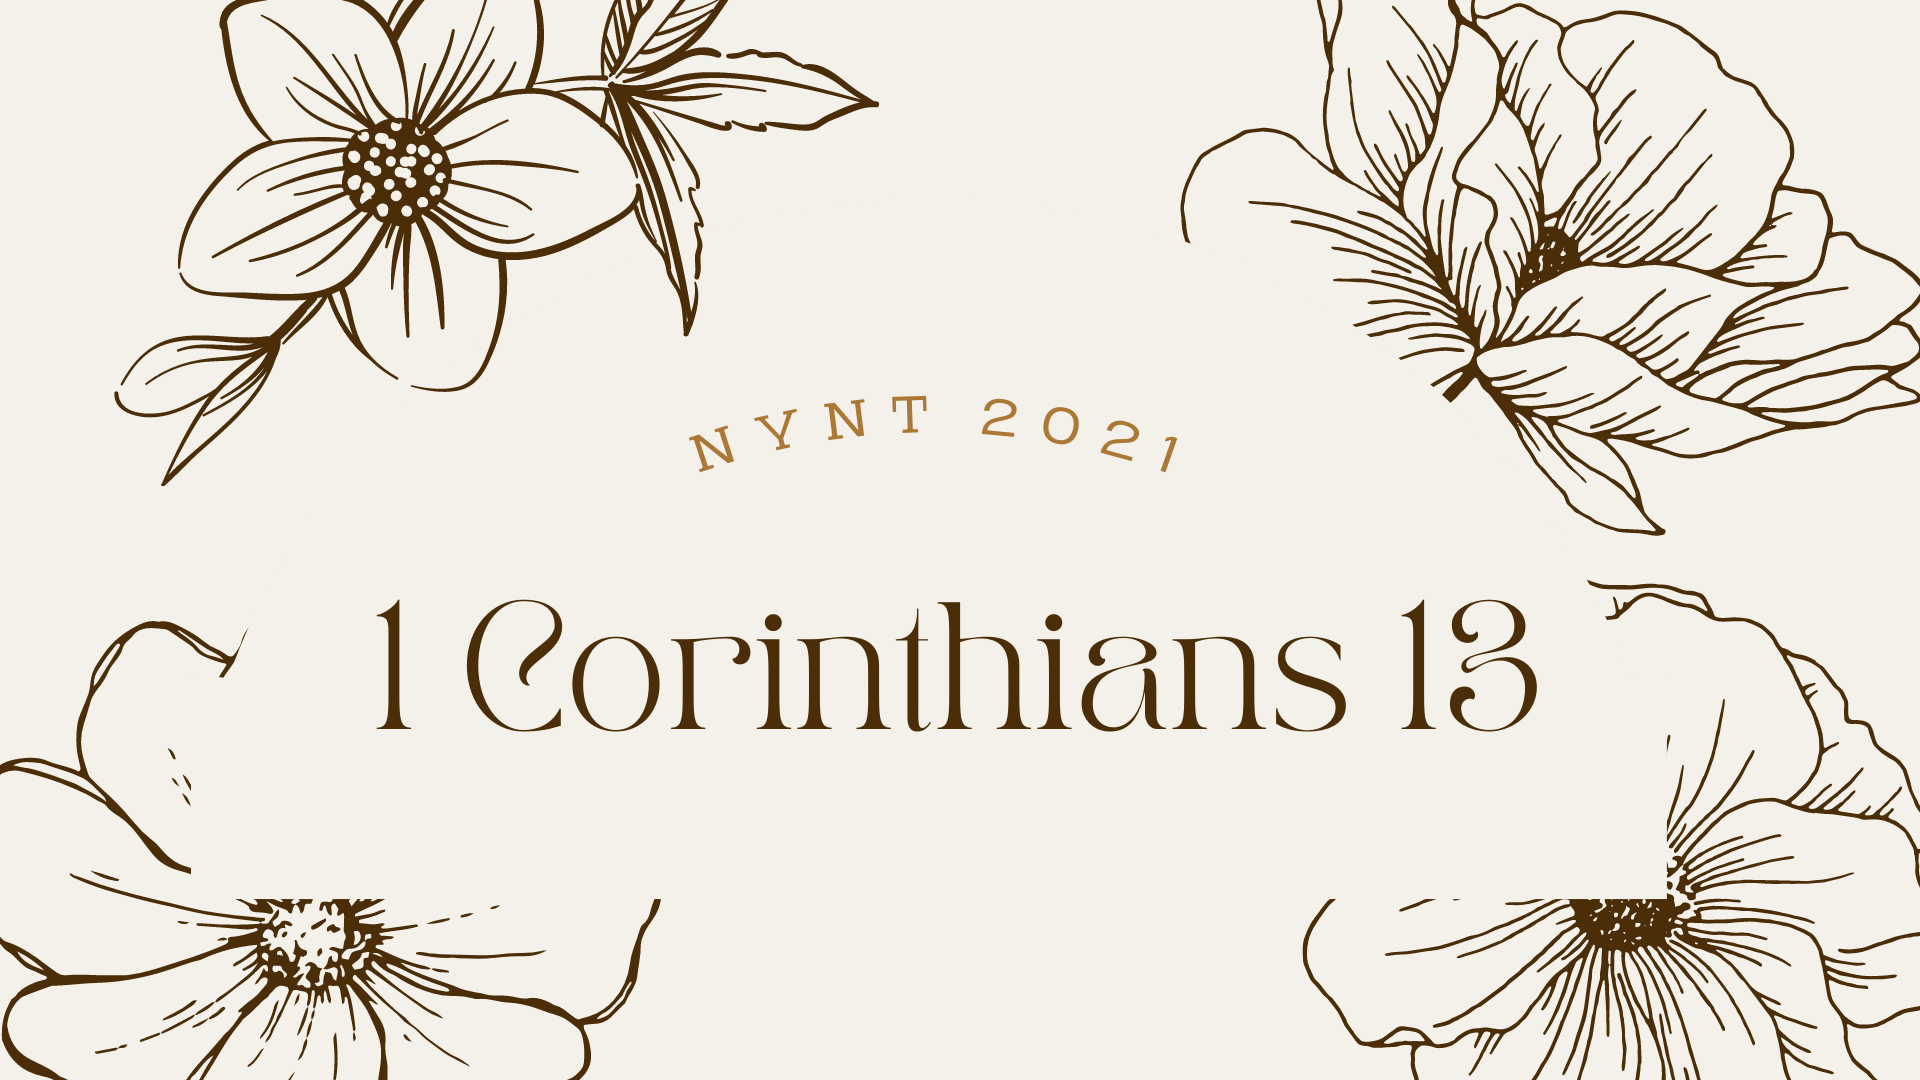 July 27: 1 Corinthians 13